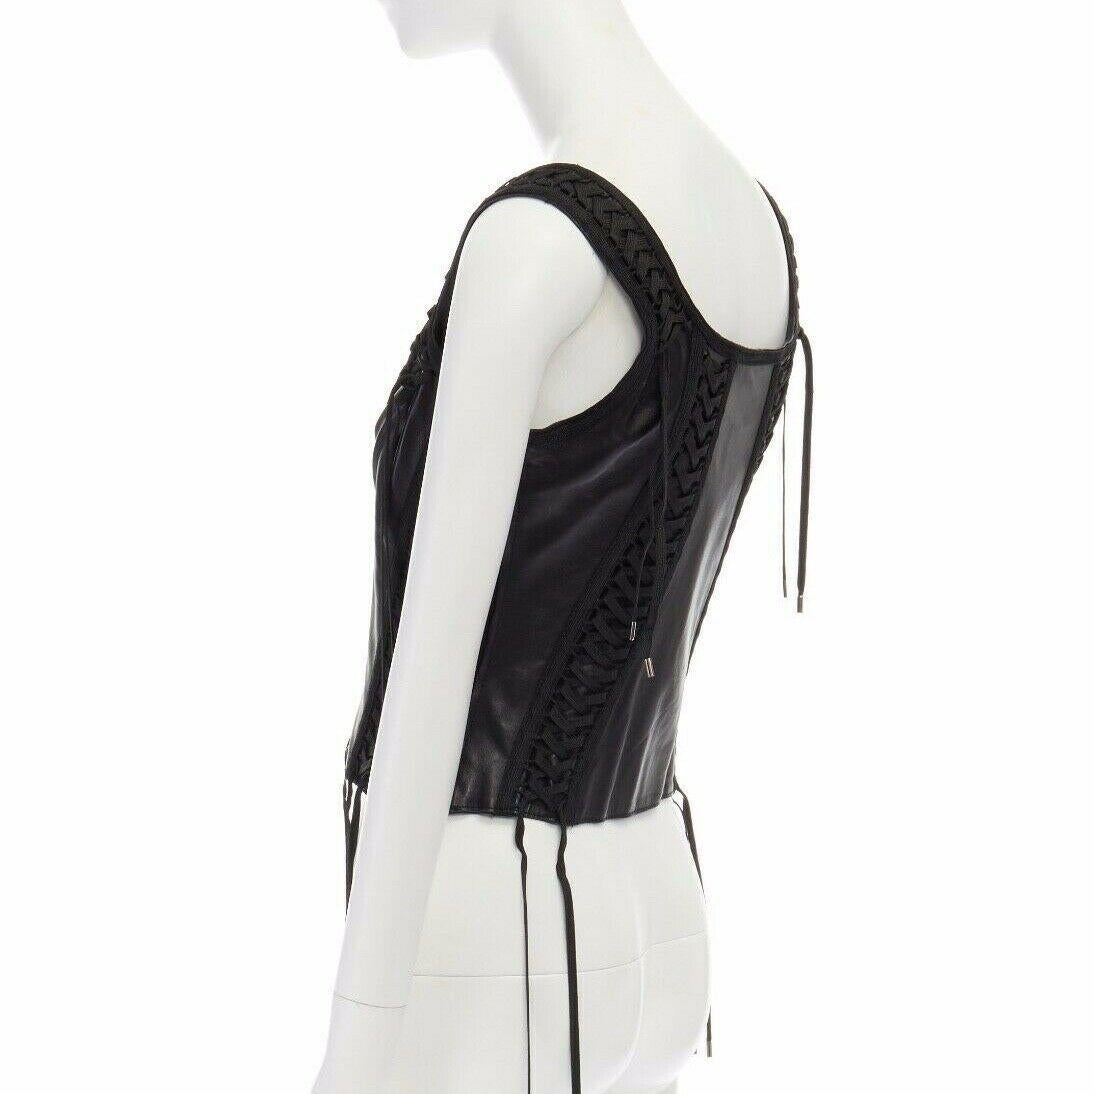 CHRISTIAN DIOR GALLIANO Vintage black leather laced corset vest top FR42 L 1